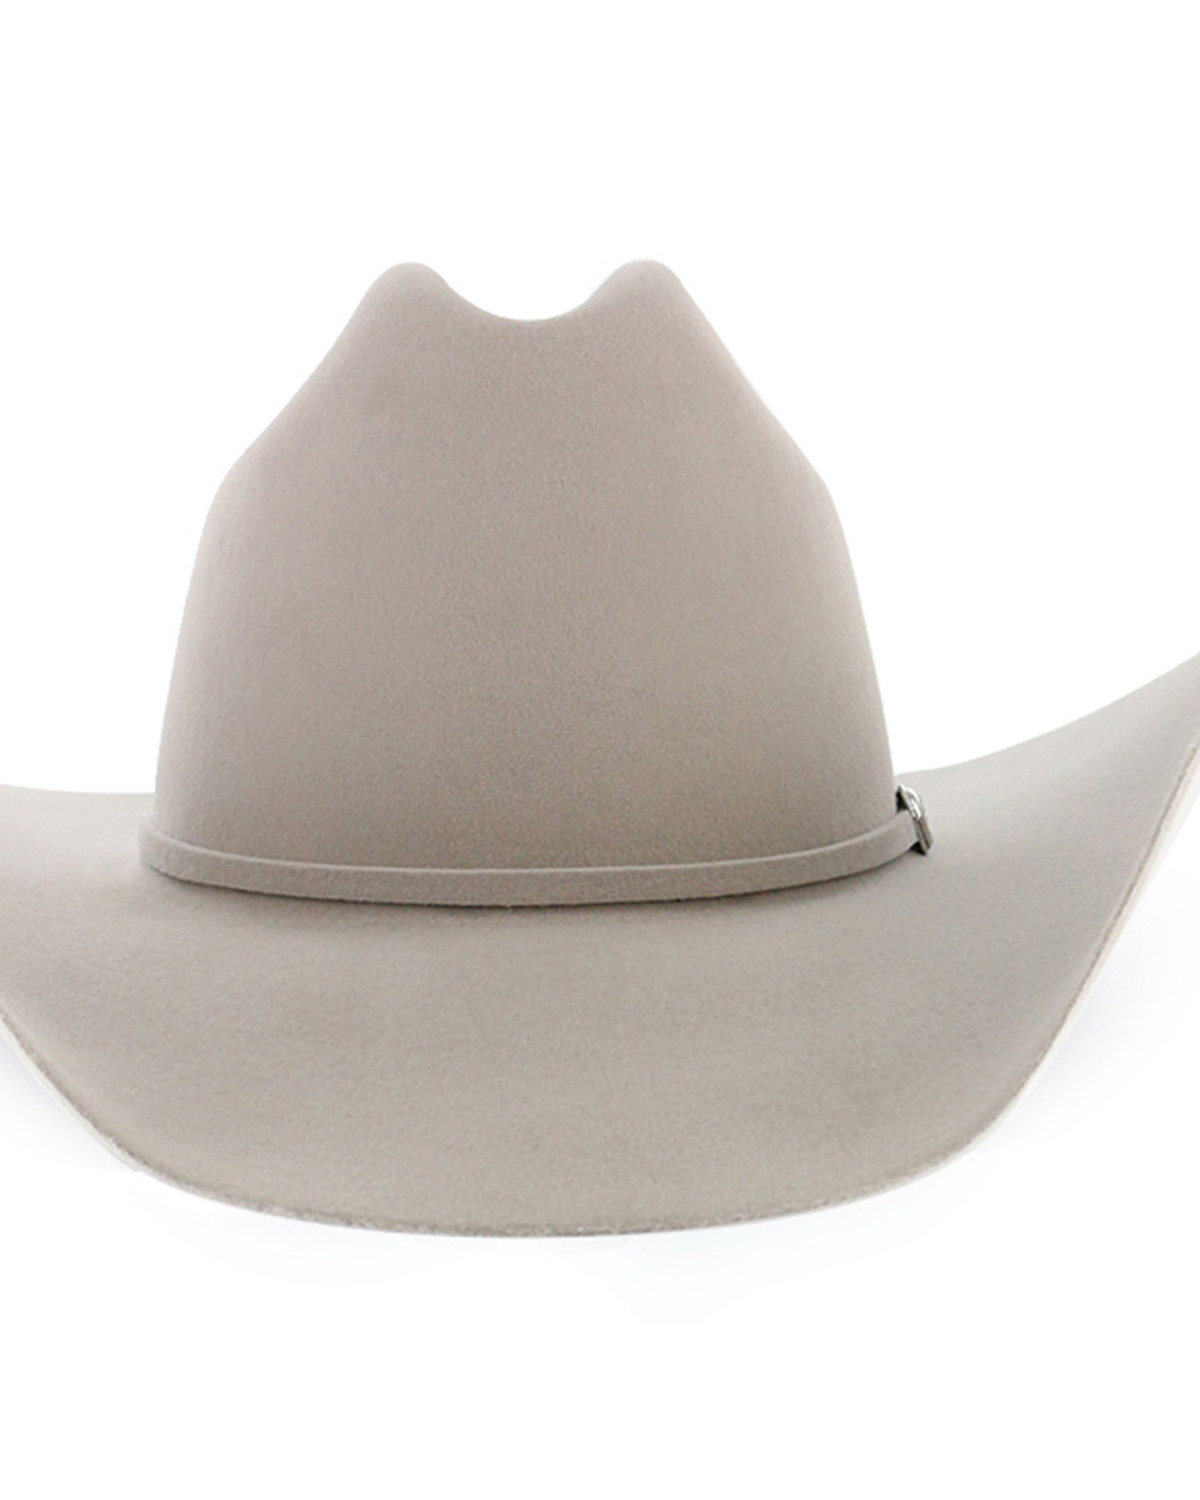 Rodeo King Men's Rodeo 7X Felt Cowboy Hat | Boot Barn